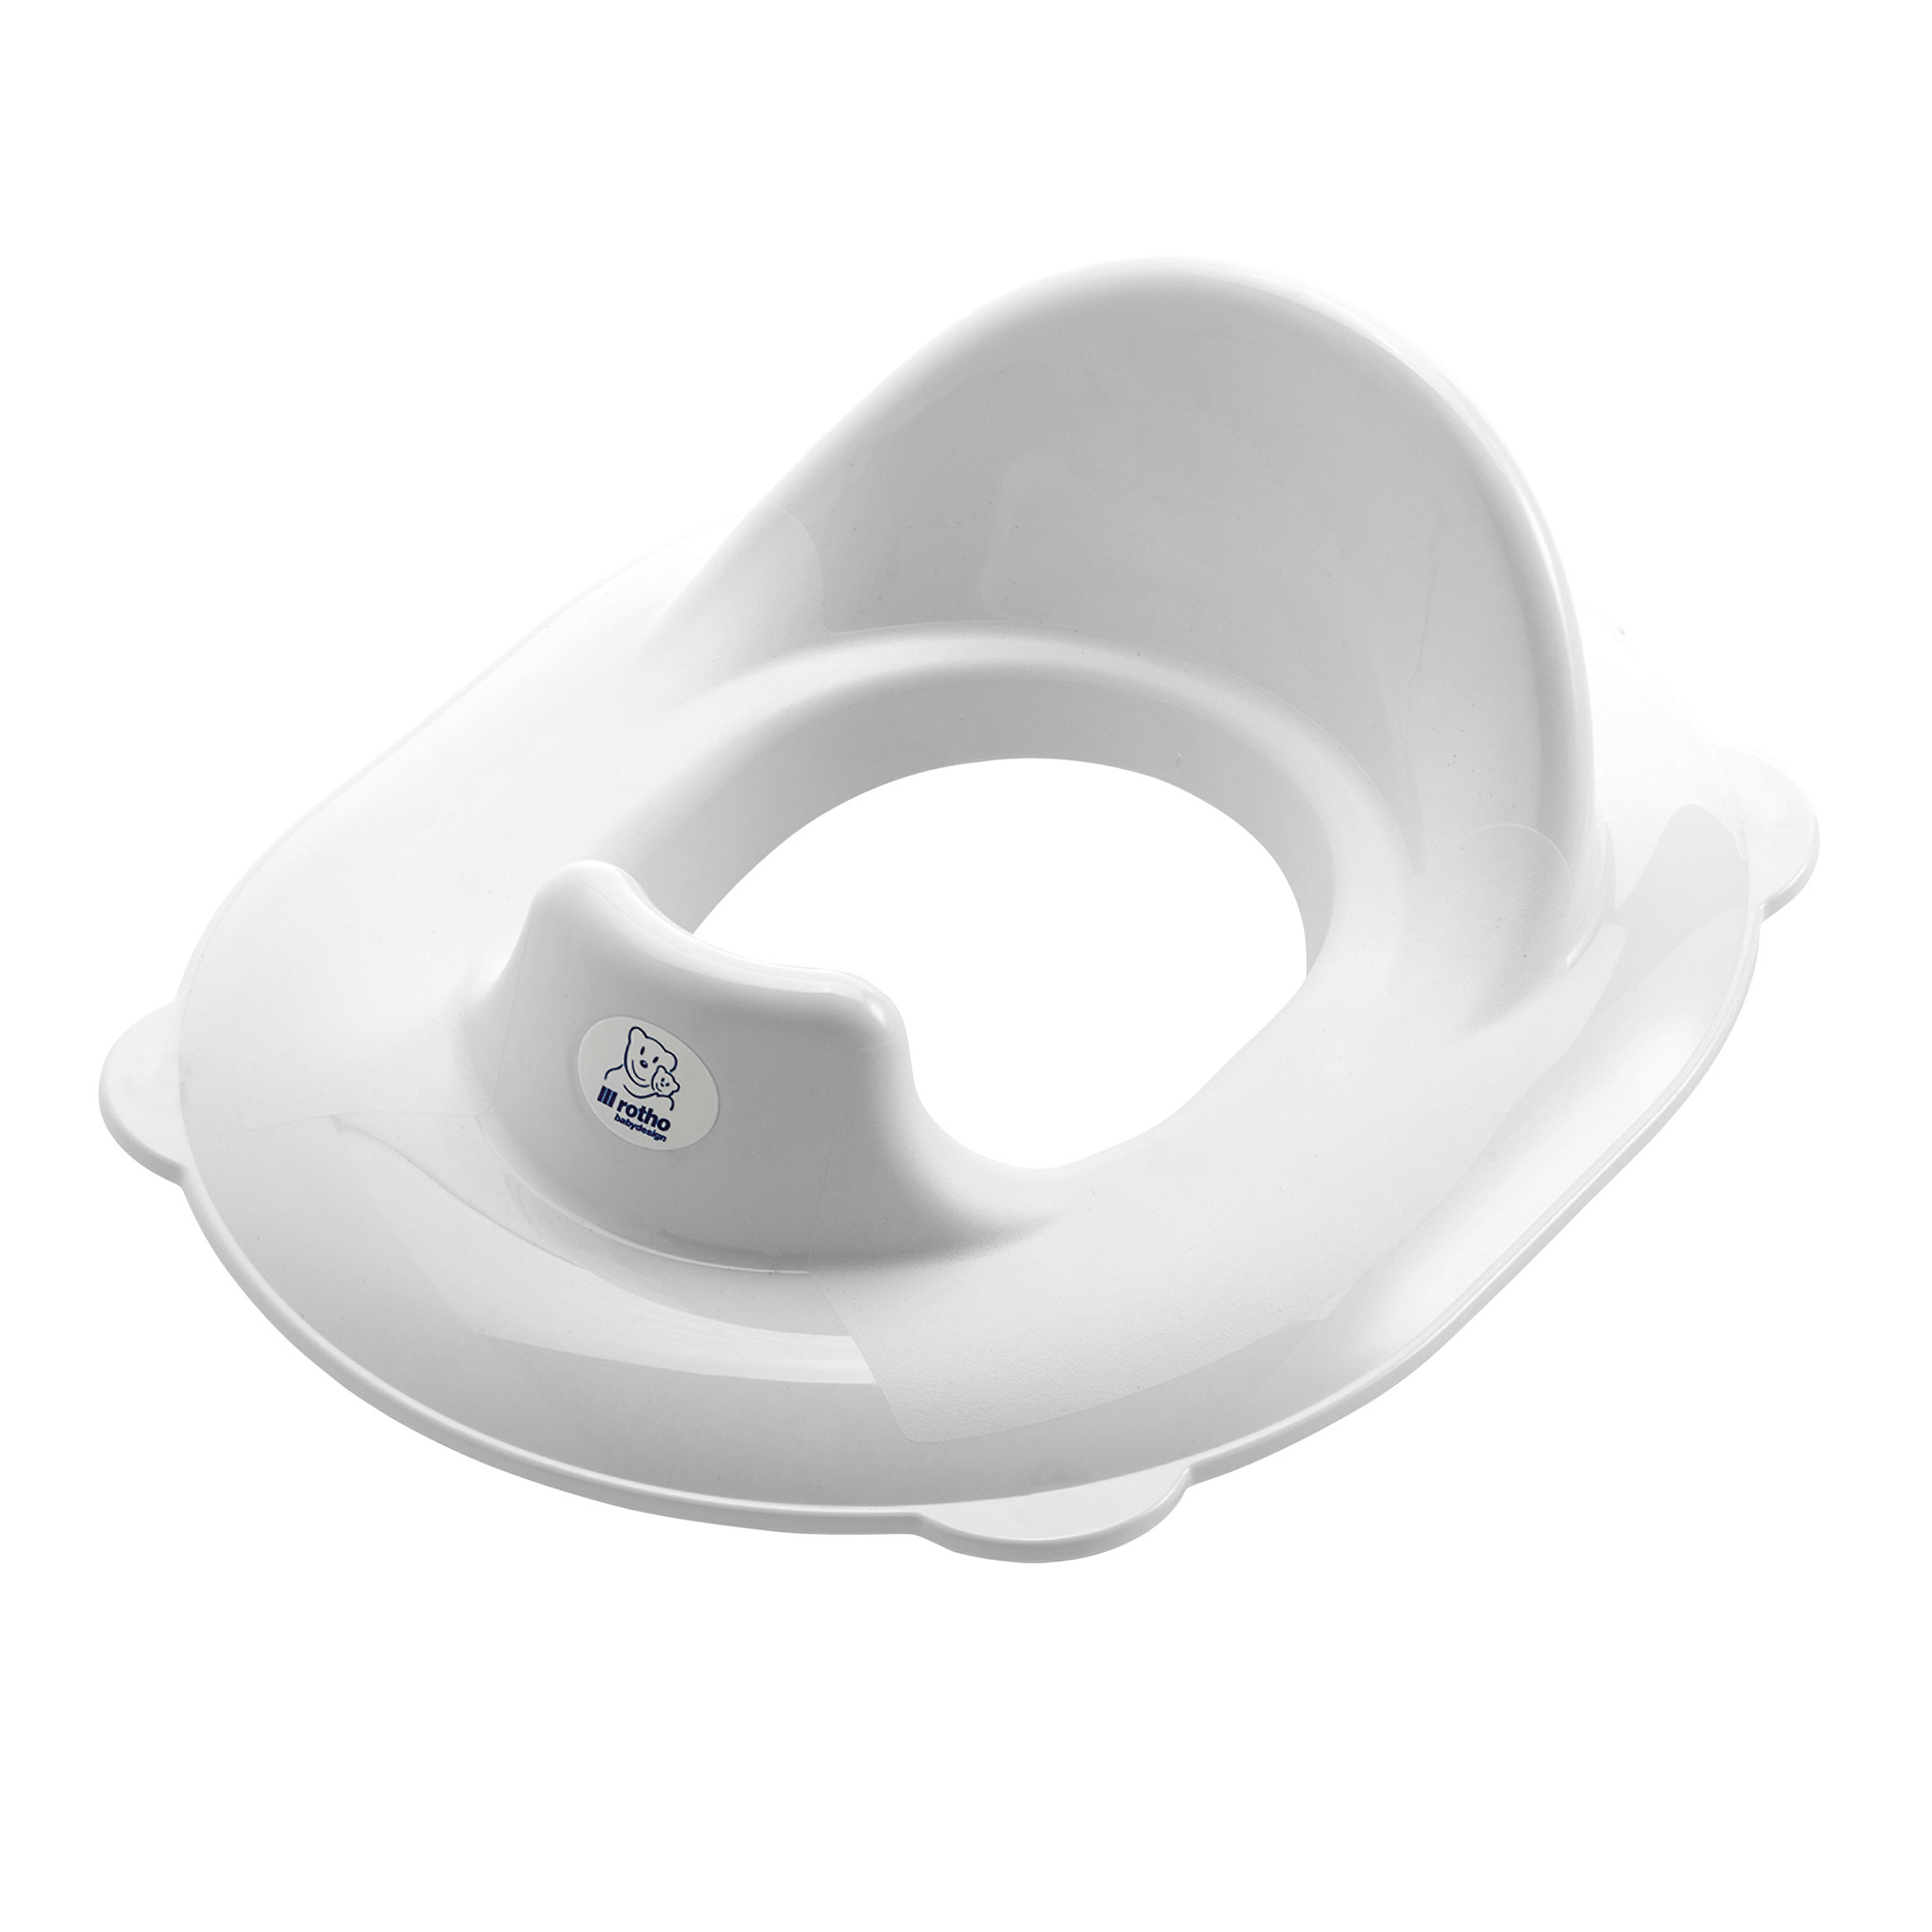 Toilettensitz TOP rotho Babydesign Weiß 2000567037400 1